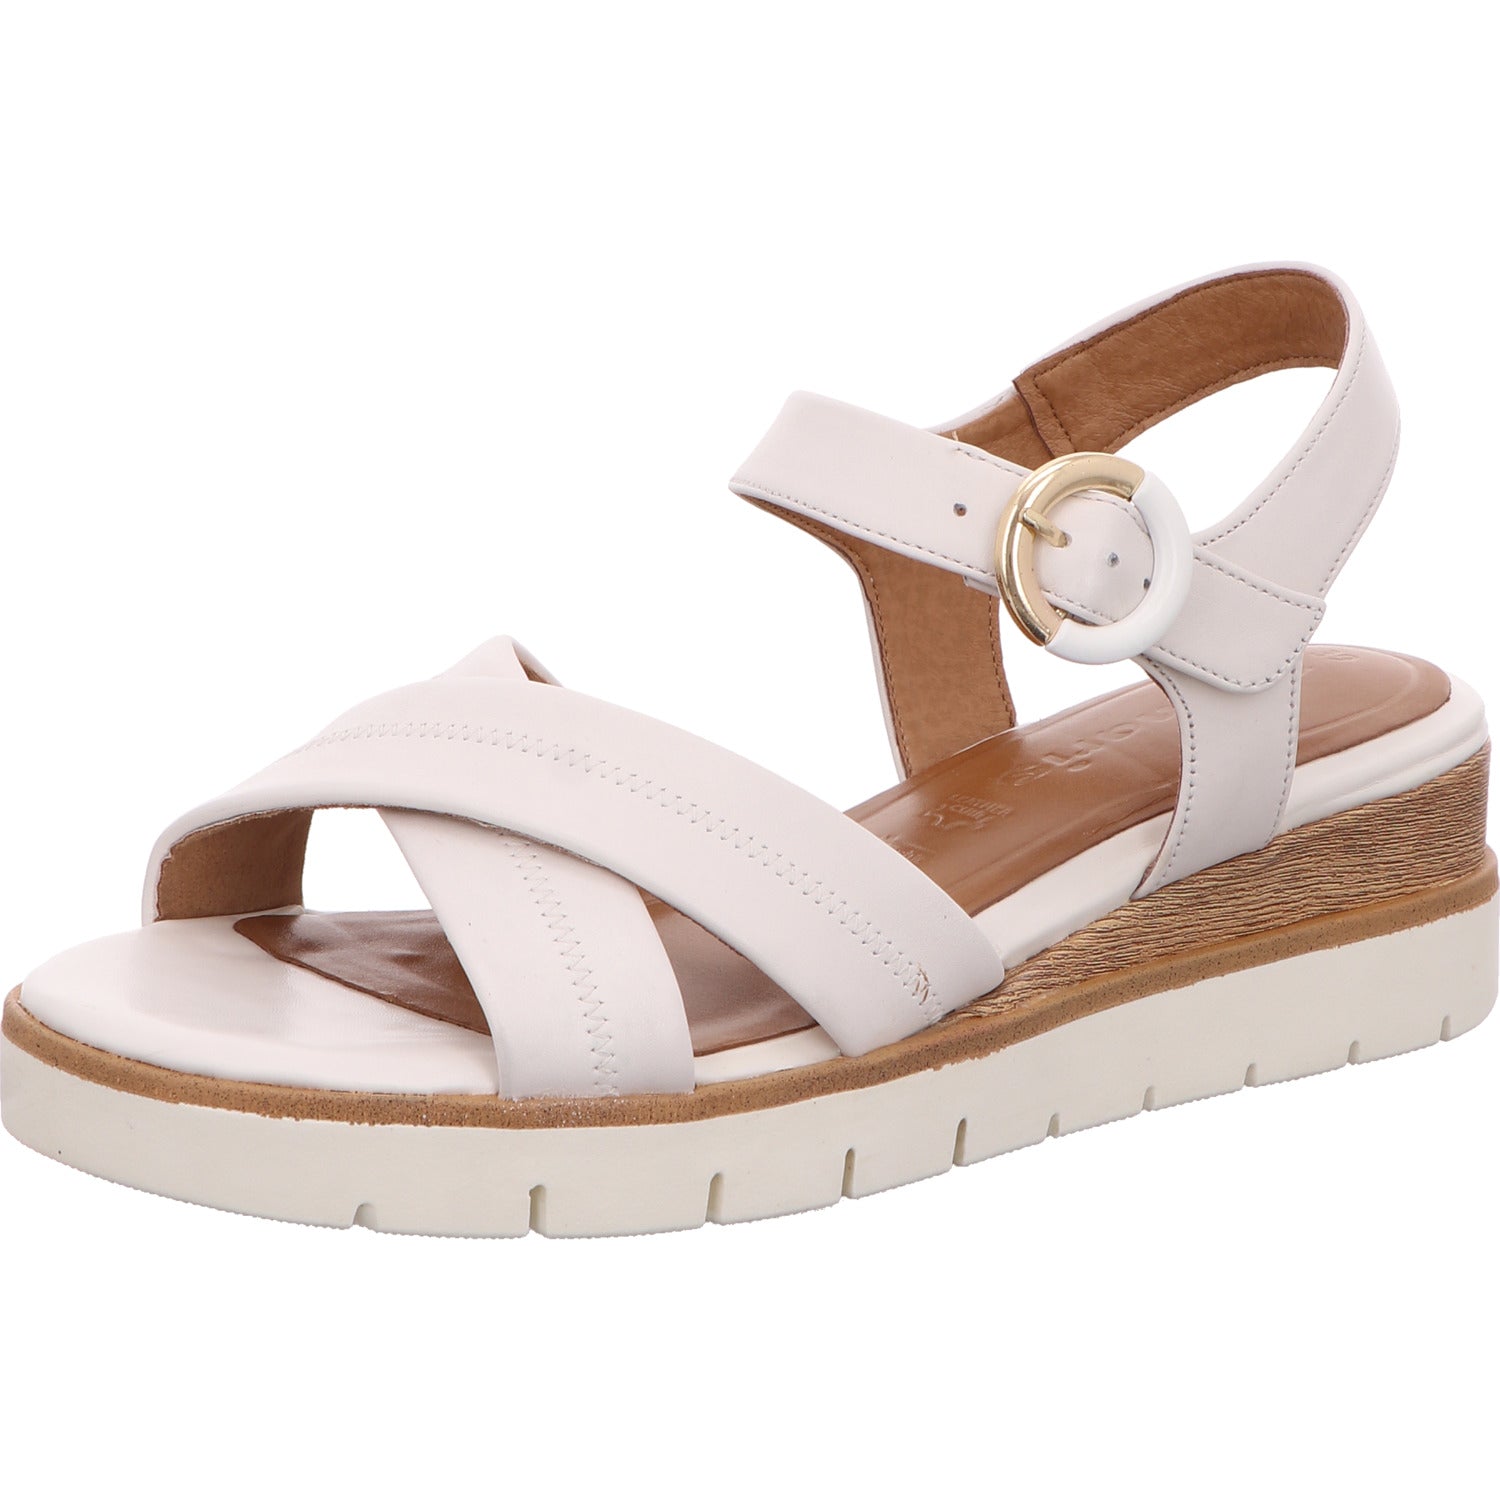 neu-tamaris-damen-sandalen-in-white-aus-leder-1